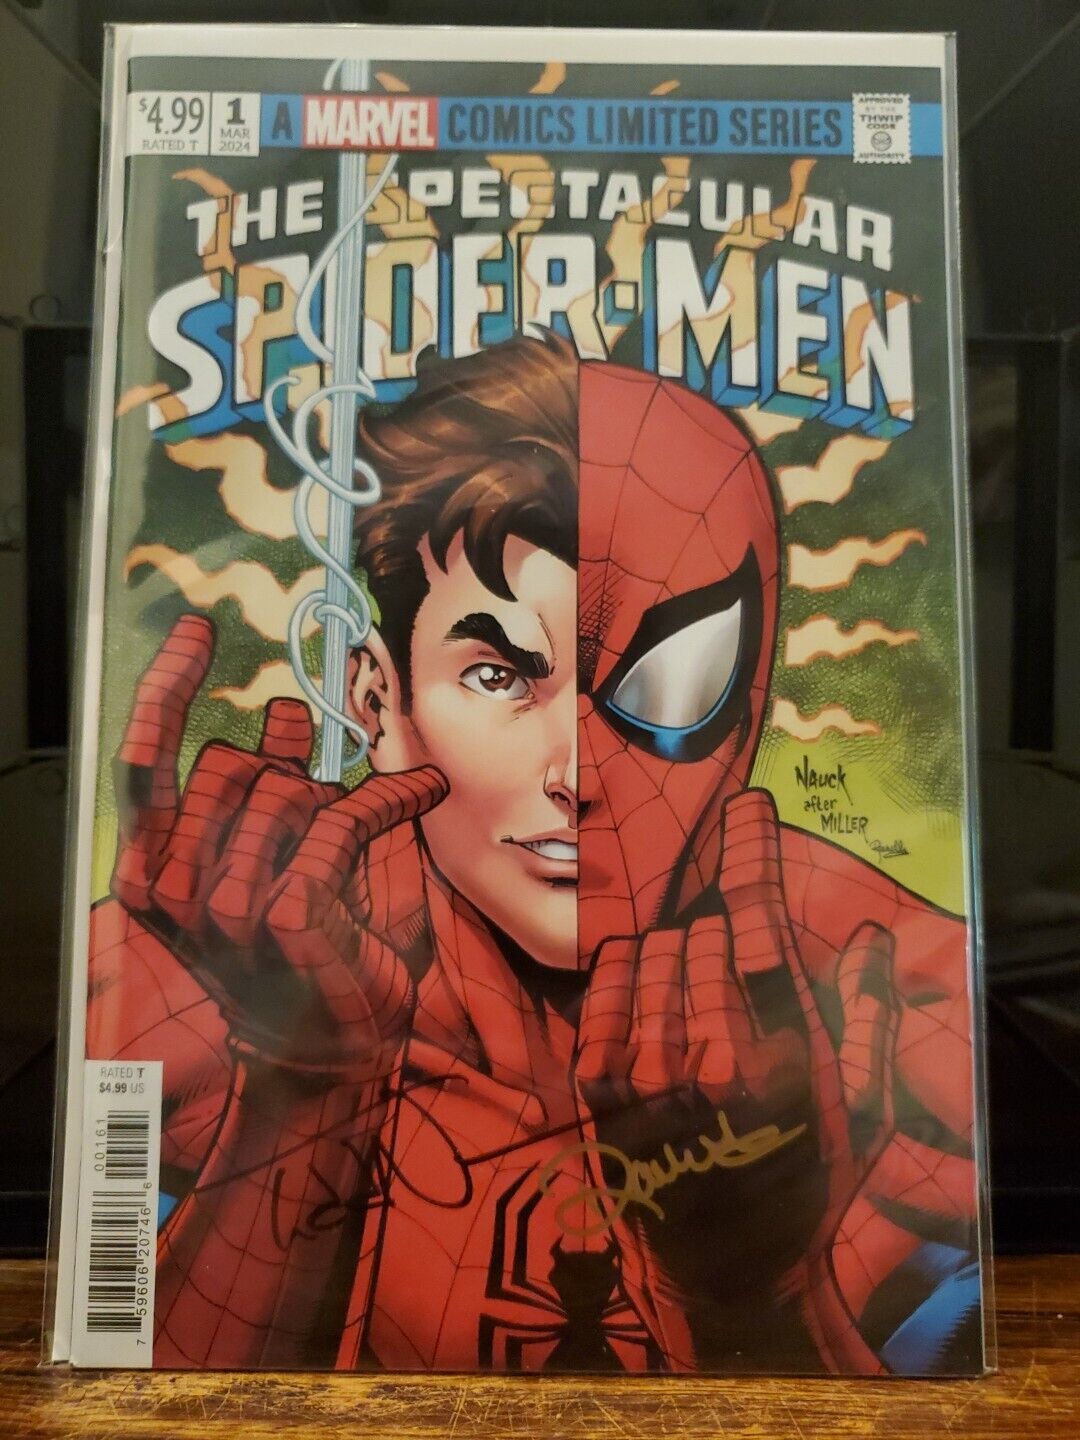 Double Signed Nauck/Rosenburg The Spectacular Spider-Men 1 Homage Variant Cover